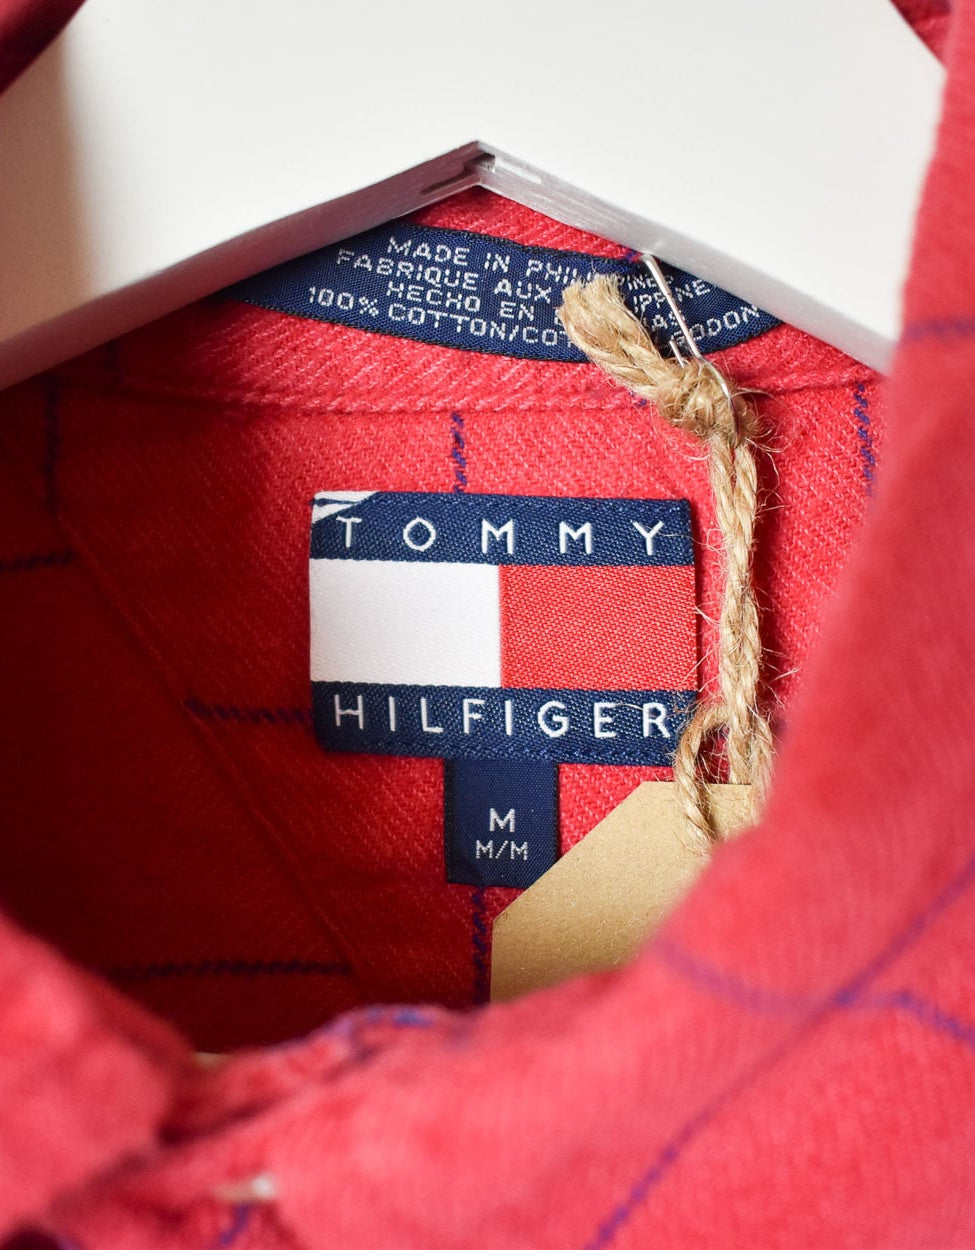 Red Tommy Hilfiger Flannel Shirt - Medium